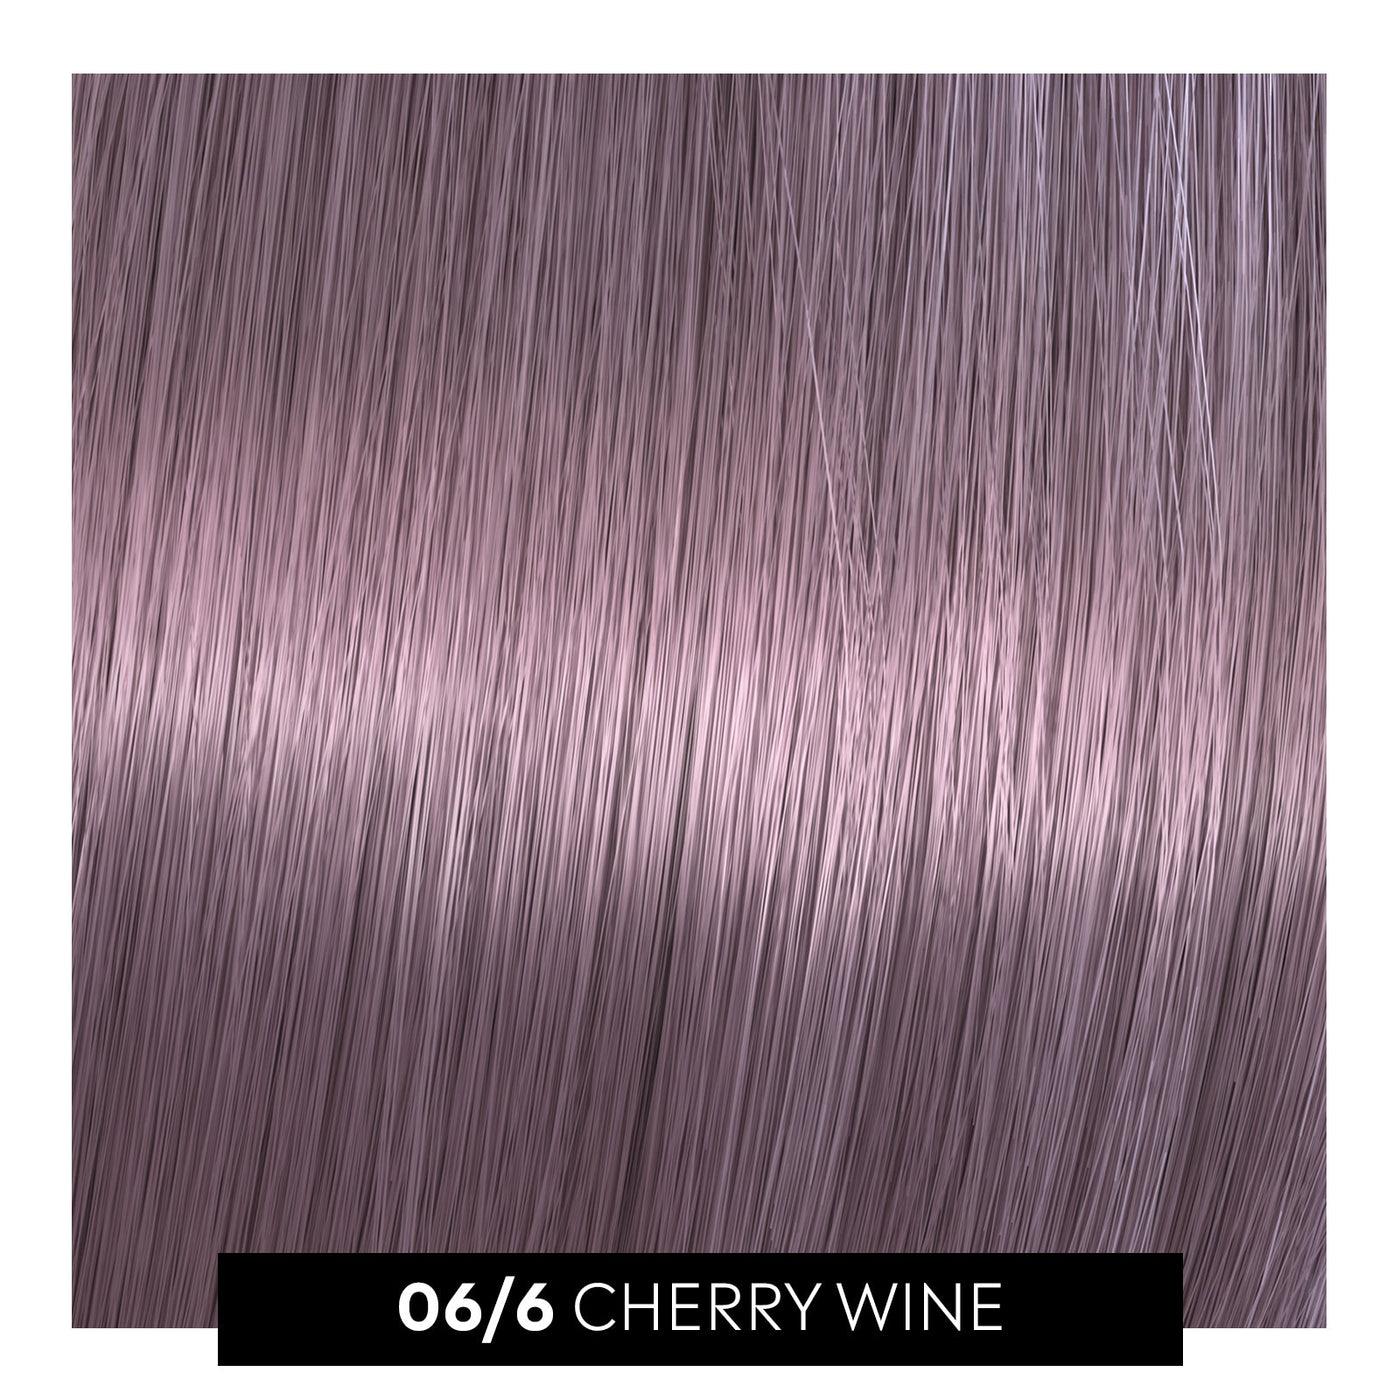 06/6 cherry wine